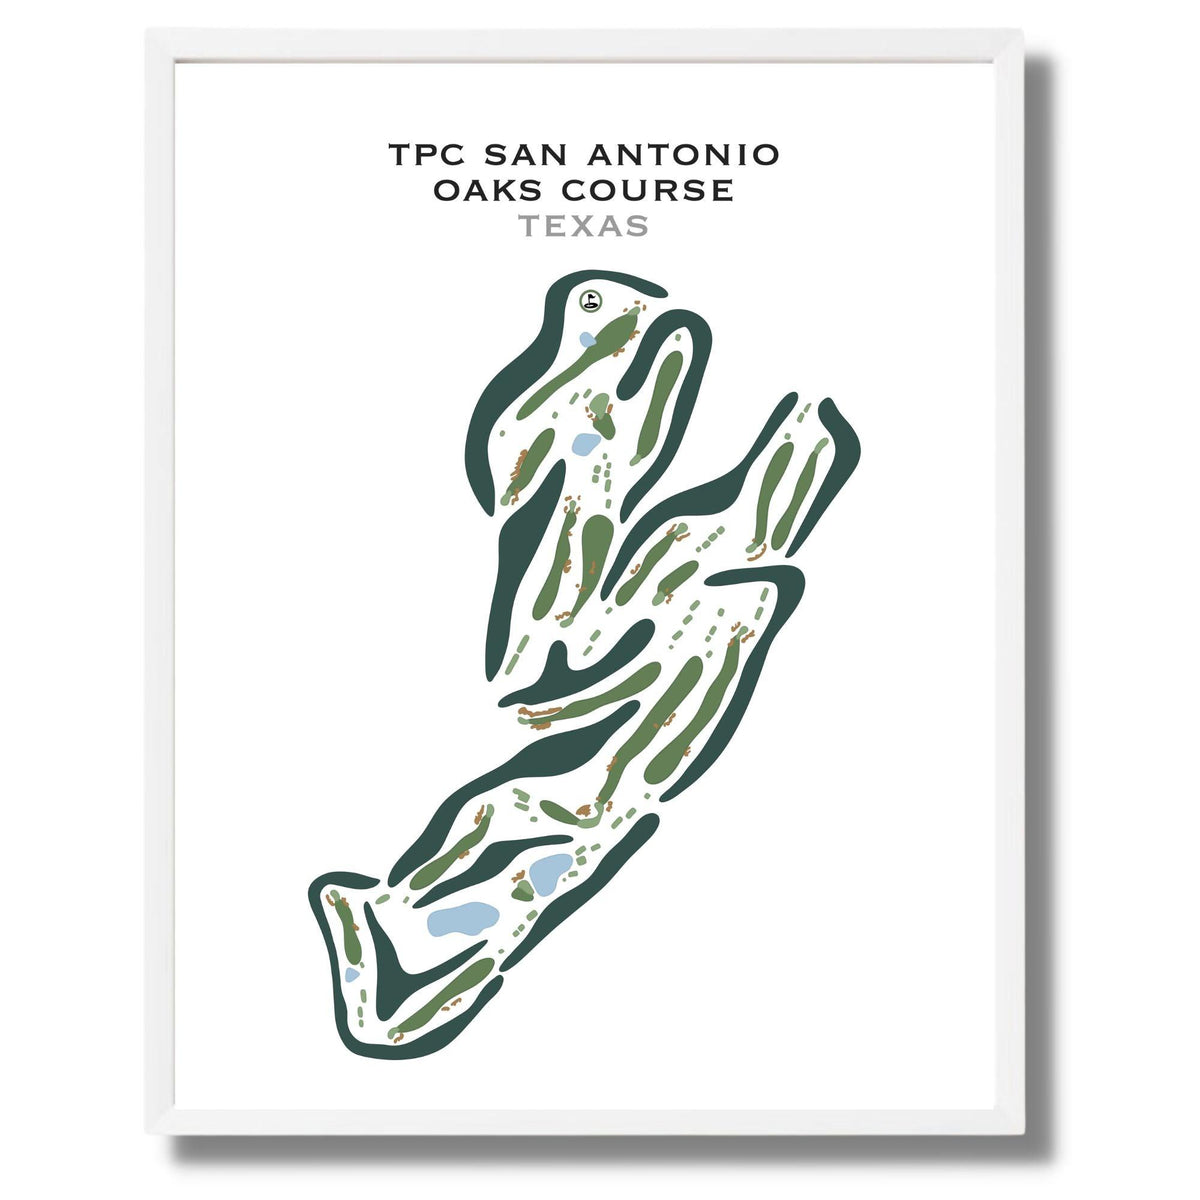 TPC San Antonio Oaks Course, Texas - Printed Golf Courses